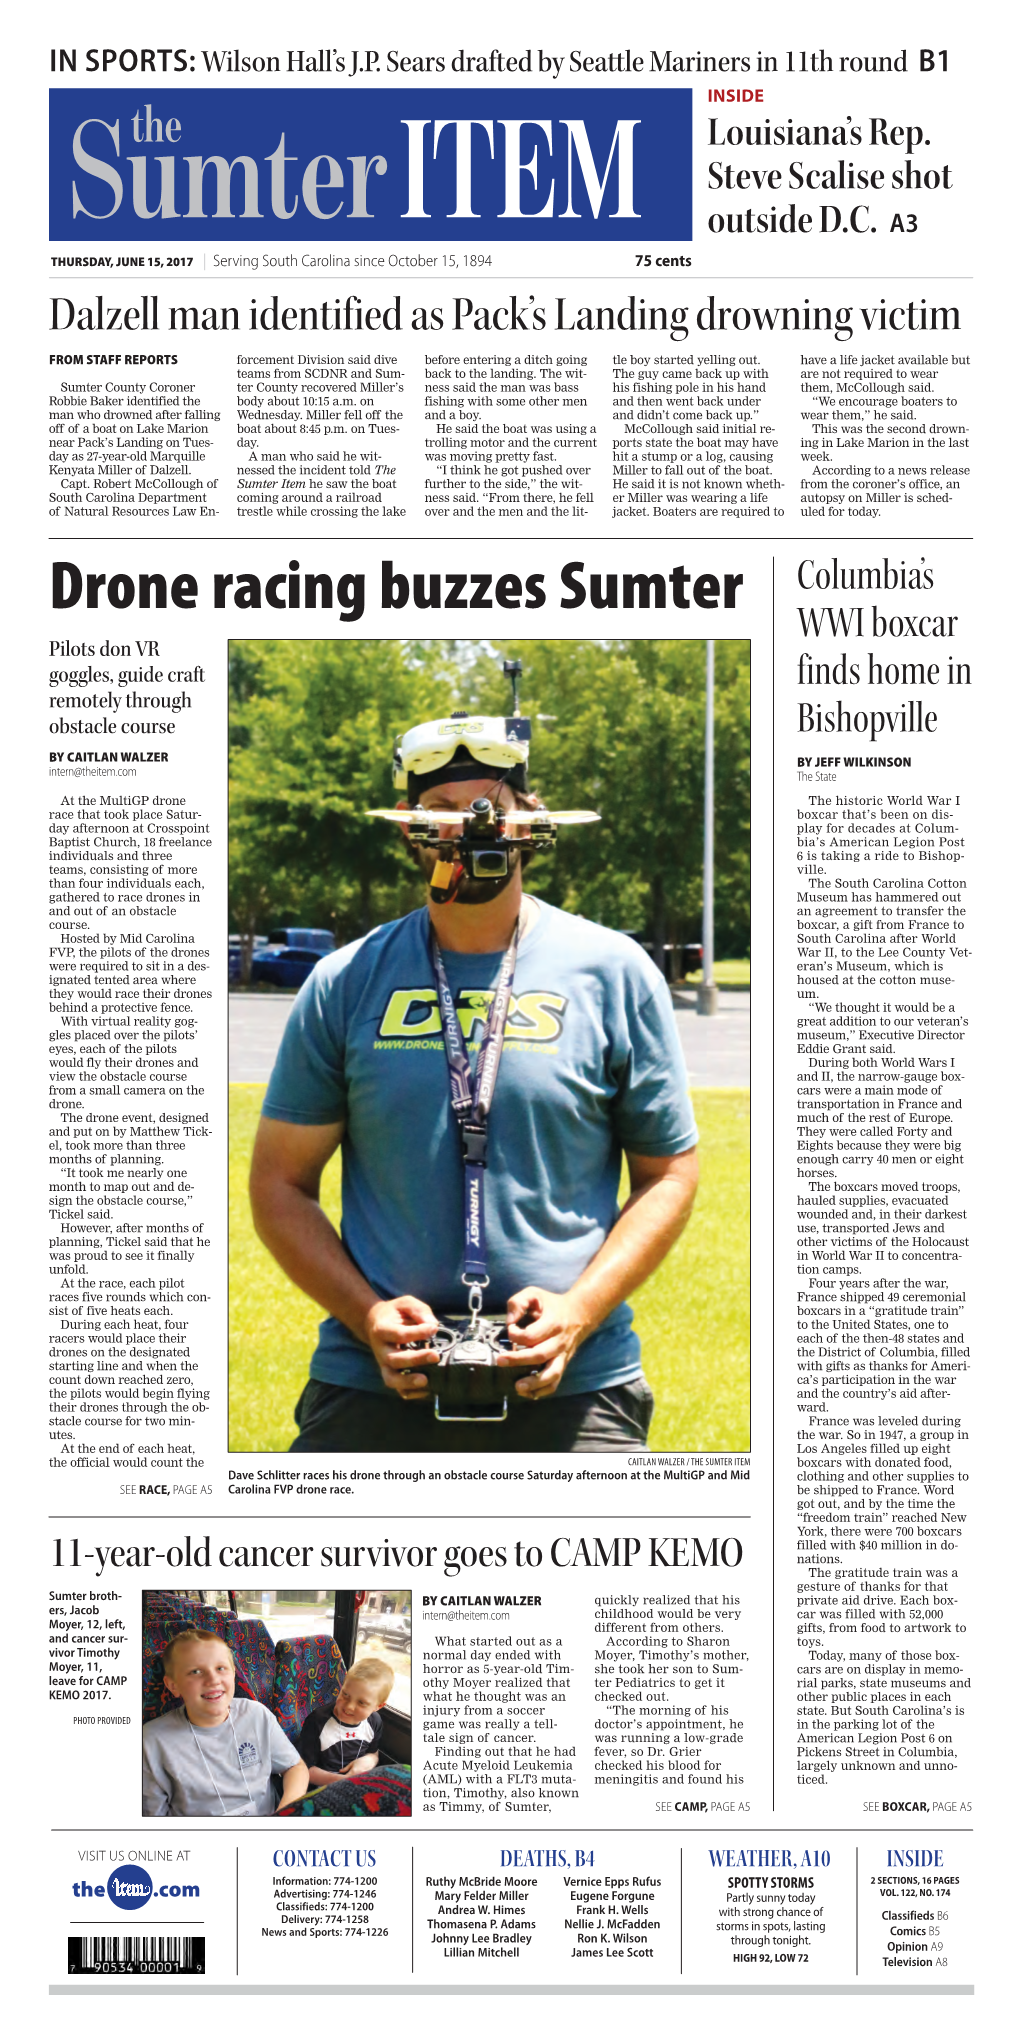 Drone Racing Buzzes Sumter